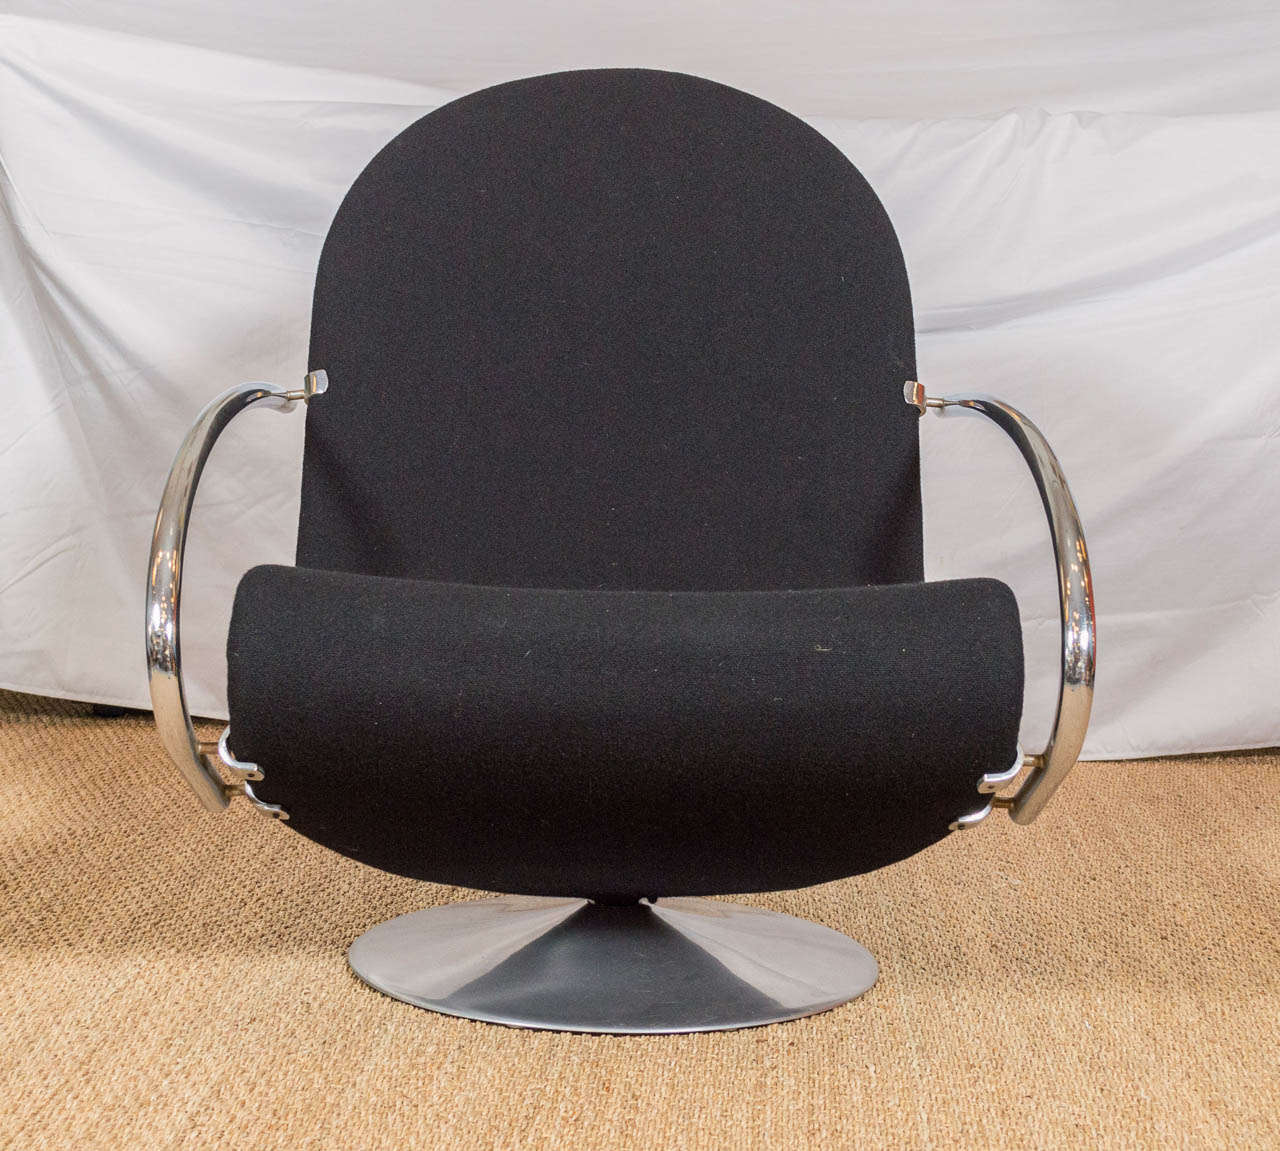 Danish, Fritz Hansen System 123 Model E lounge chair, designed by Verner Panton. Black wool upholstery, chair swivels.